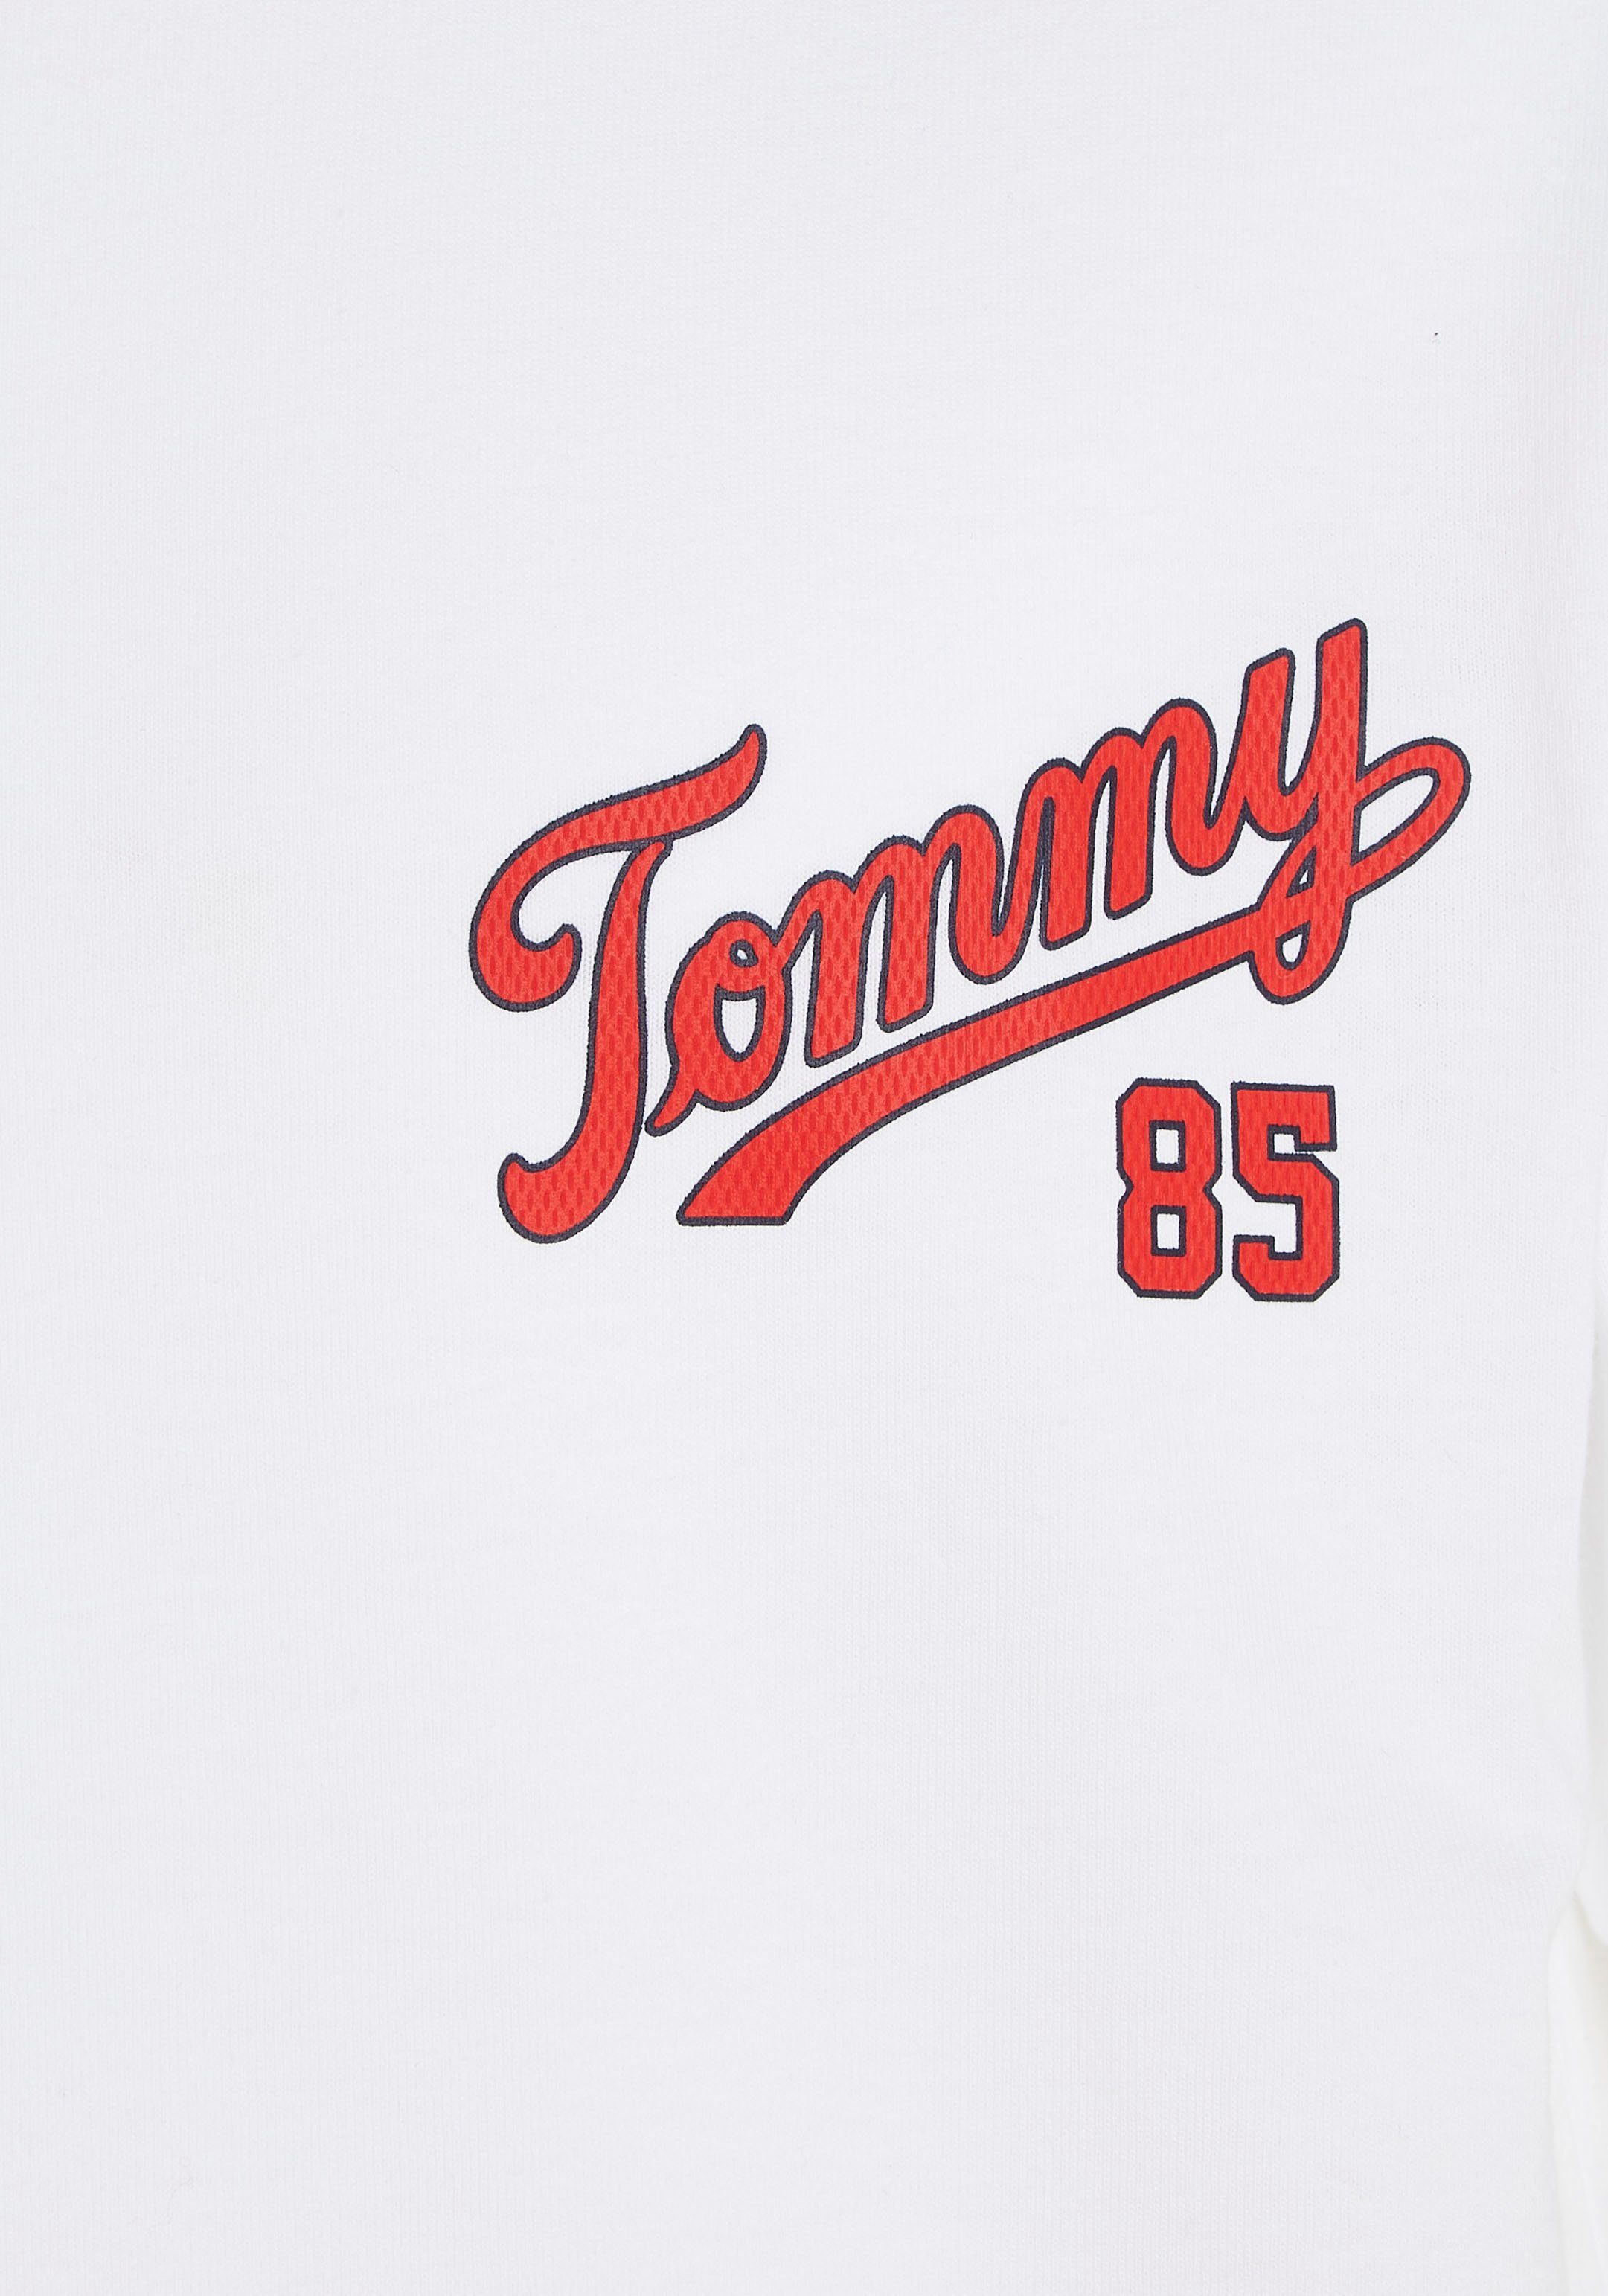 Logoprint Tommy LOGO TEE White mit Jeans COLLEGE 85 CLSC T-Shirt TJM